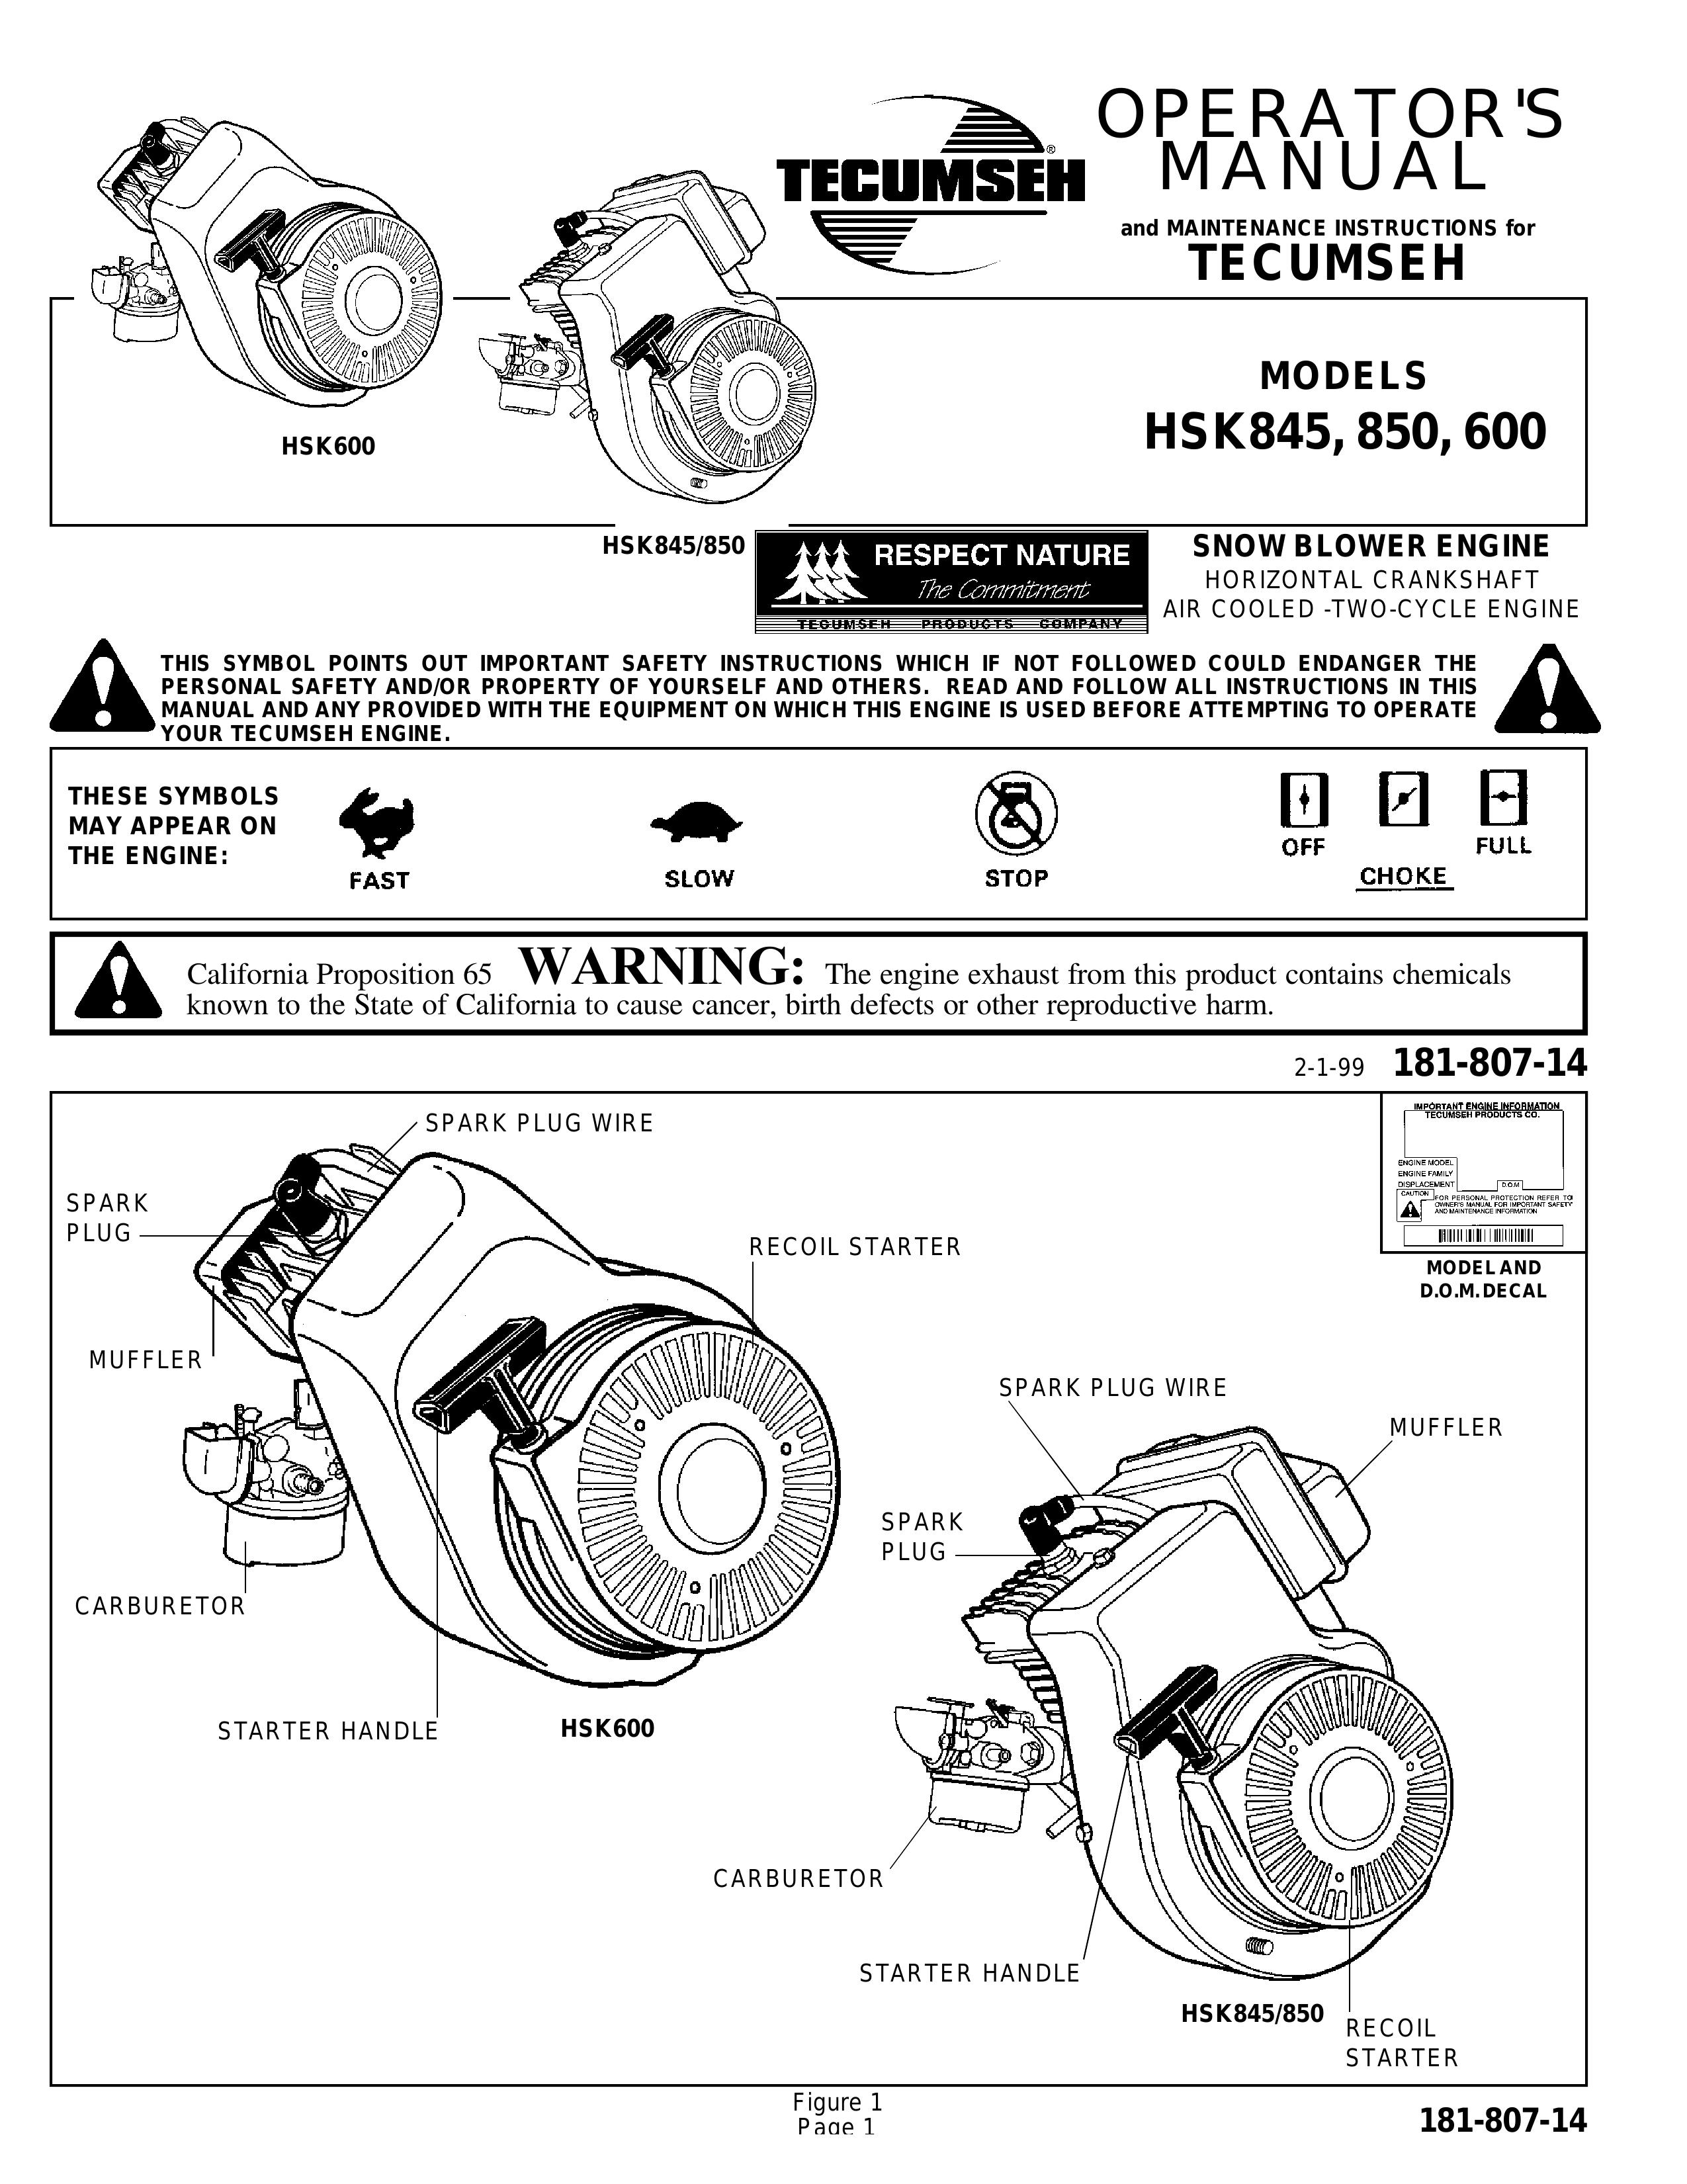 Tecumseh HSK845 Snow Blower User Manual